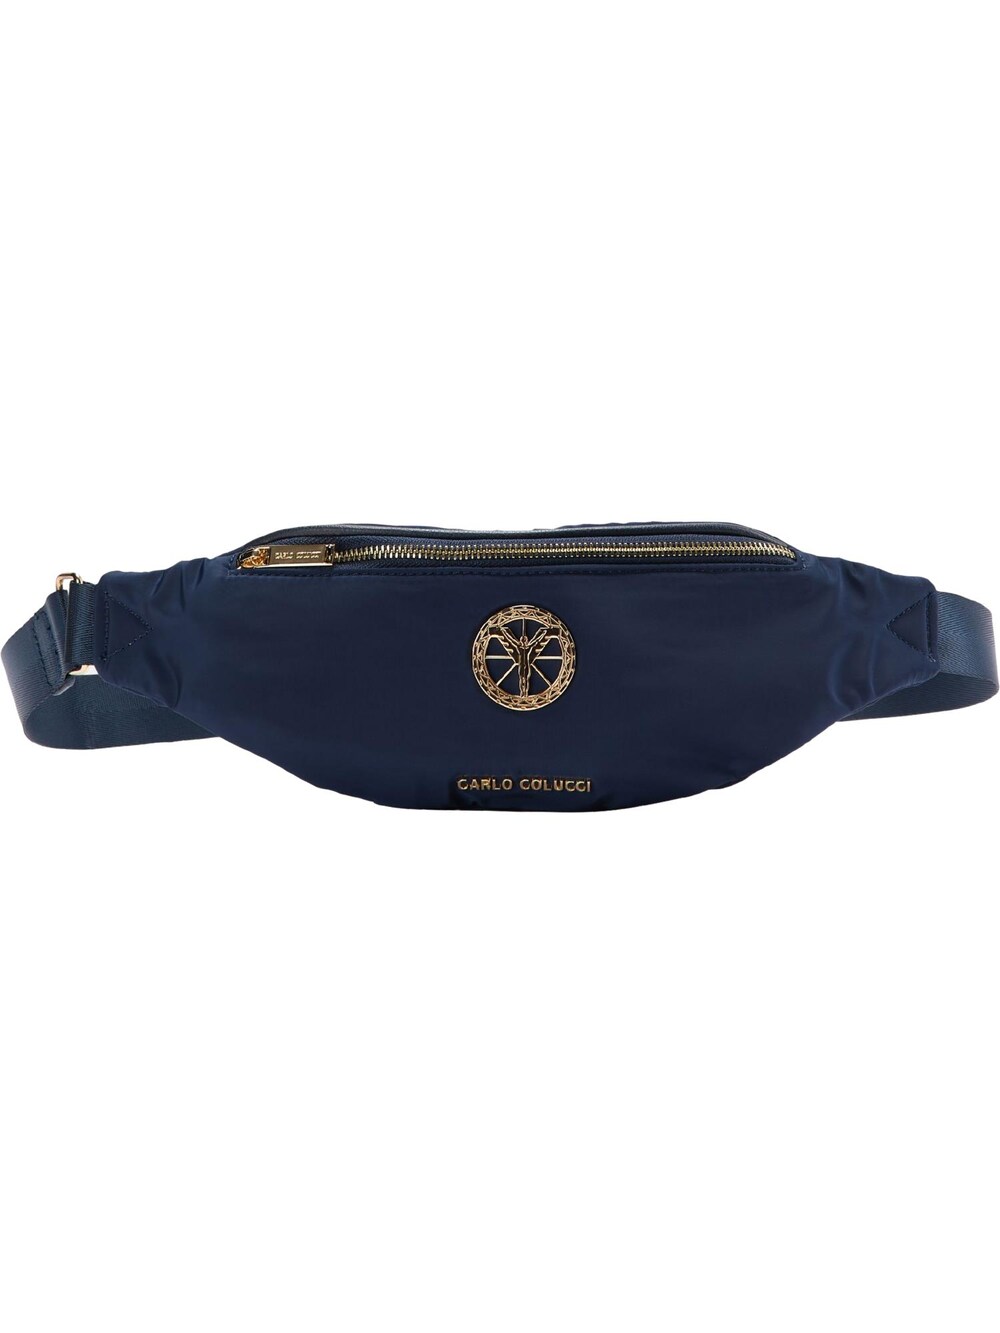 Поясная сумка Carlo Colucci, темно-синий поясная сумка кофейного carlo gattini 7013 04